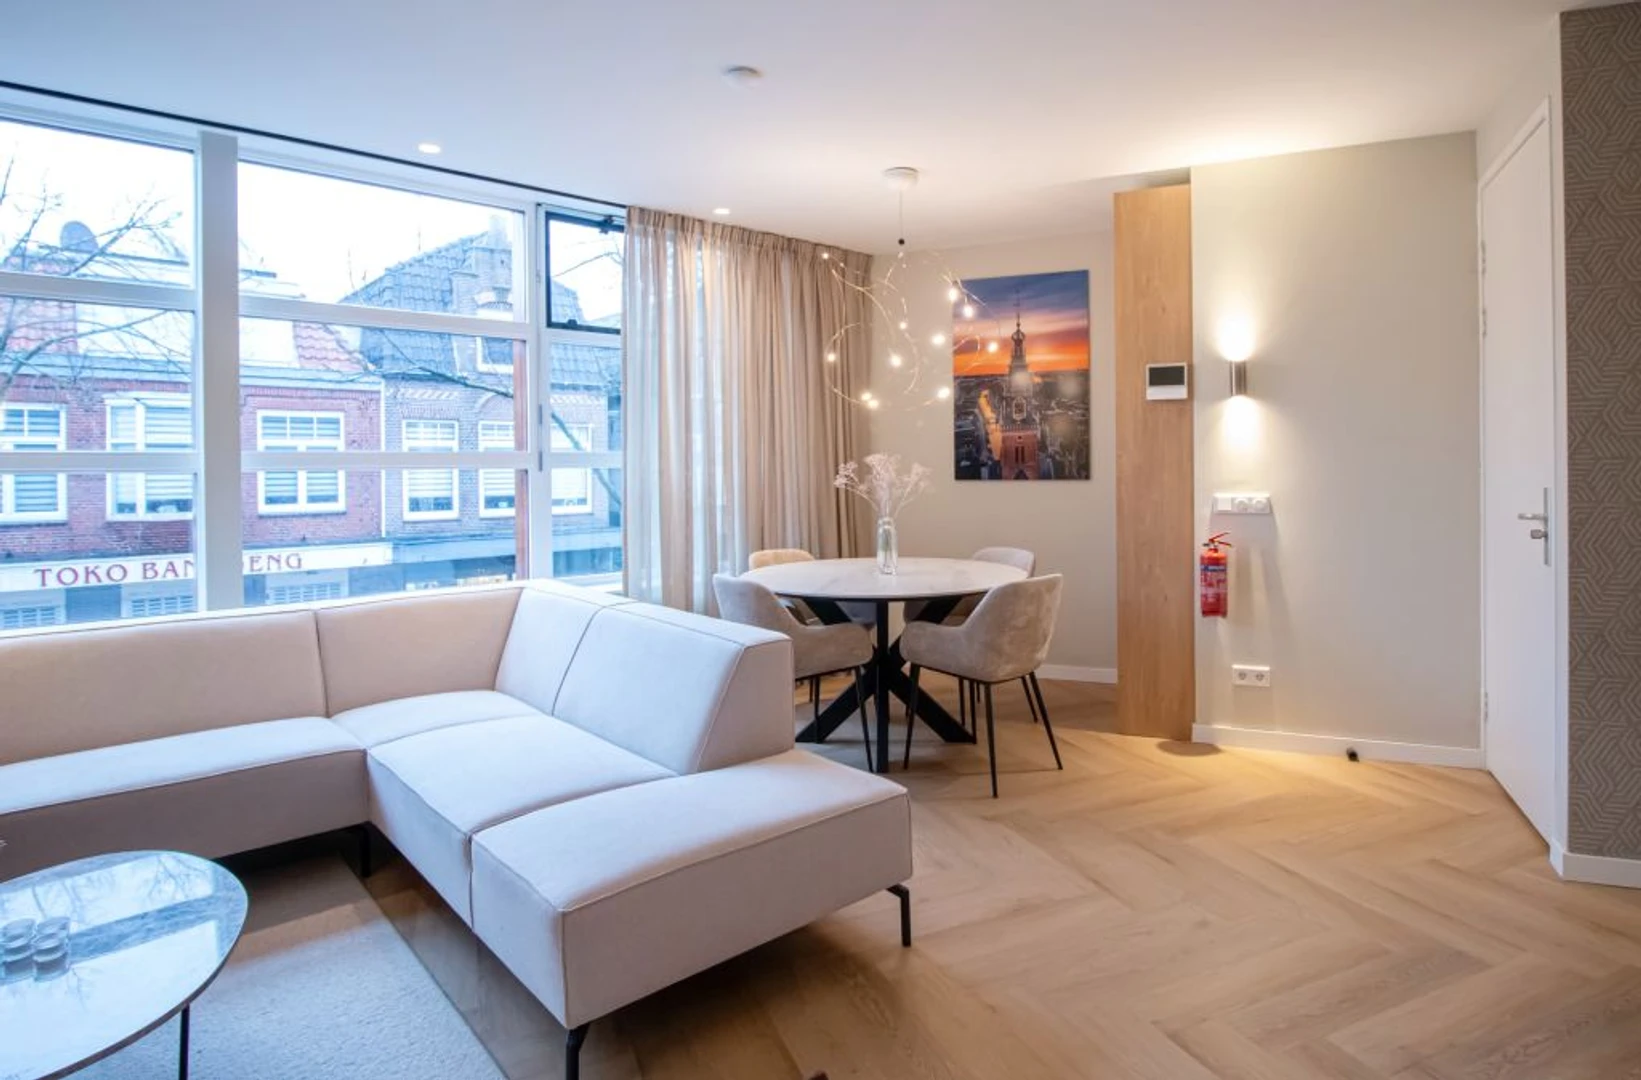 Komplette Wohnung voll möbliert in Alkmaar